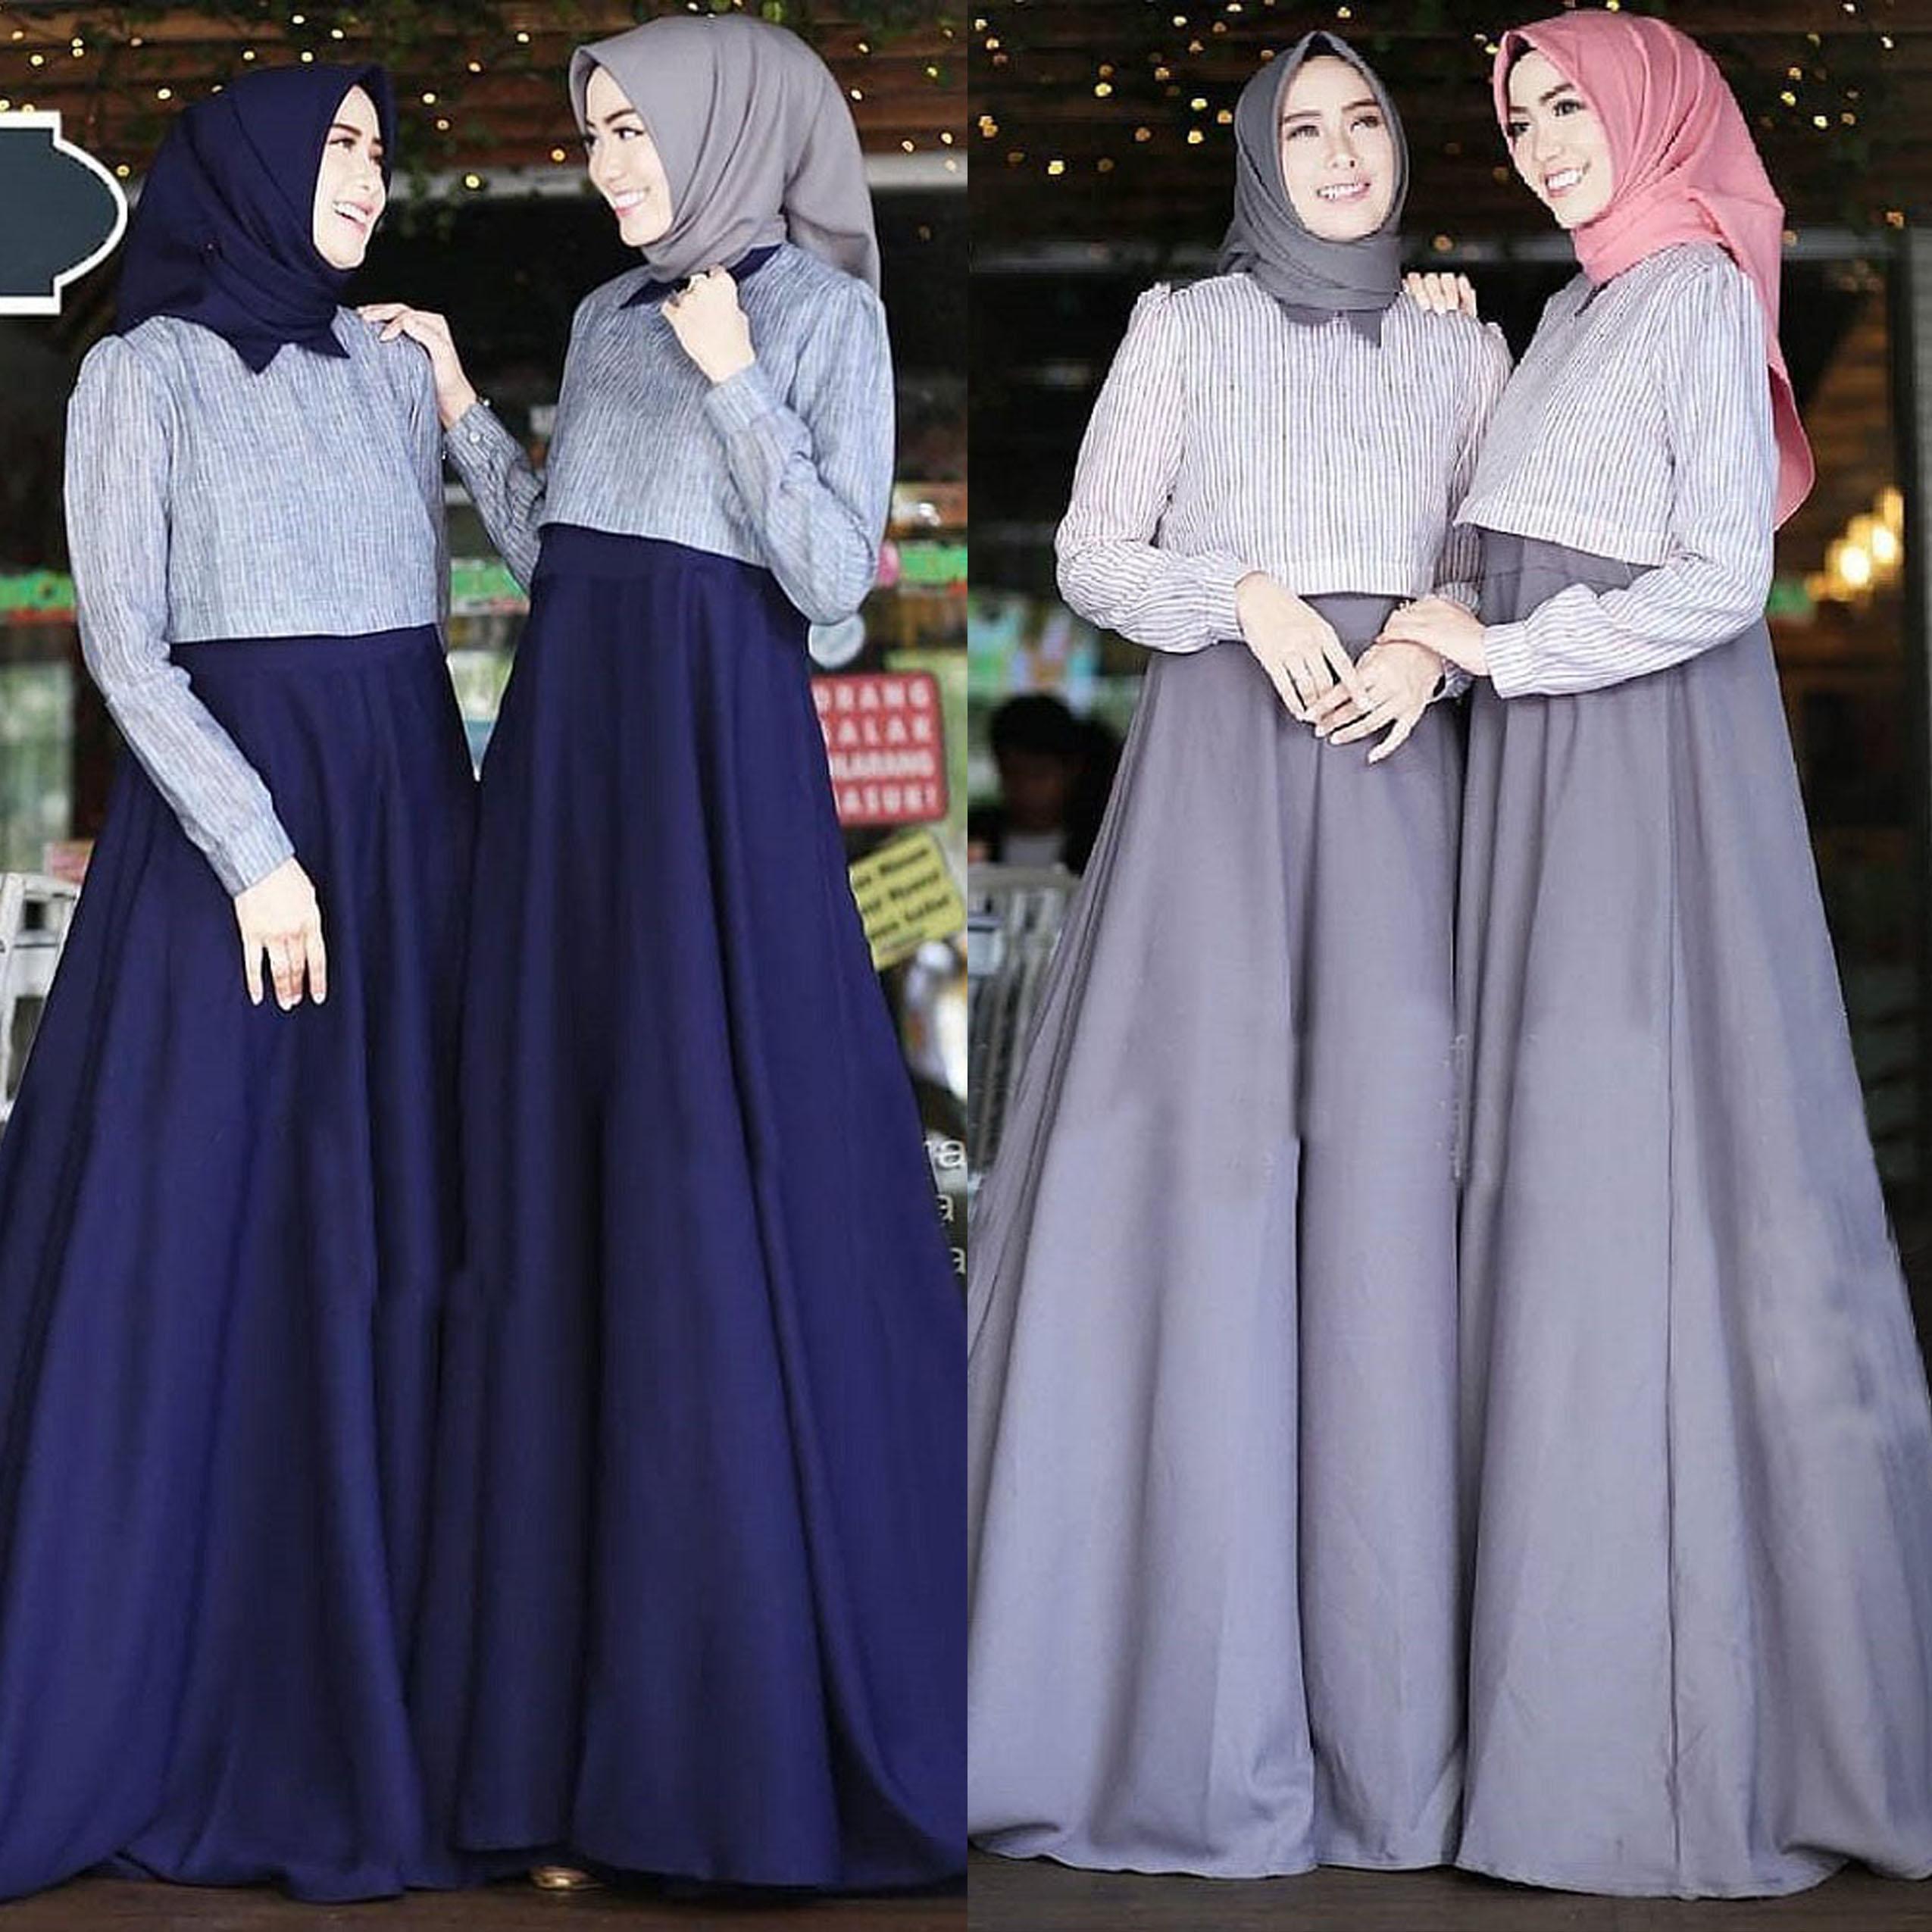 Baju Muslim Modern LESLEY DRESS Bahan WOLYCRAPE MIX SUPERNOVA GAMIS WANITA TERBARU 2020 Modern Remaja Gamis Wanita Murah Gamis Wanita Jumbo